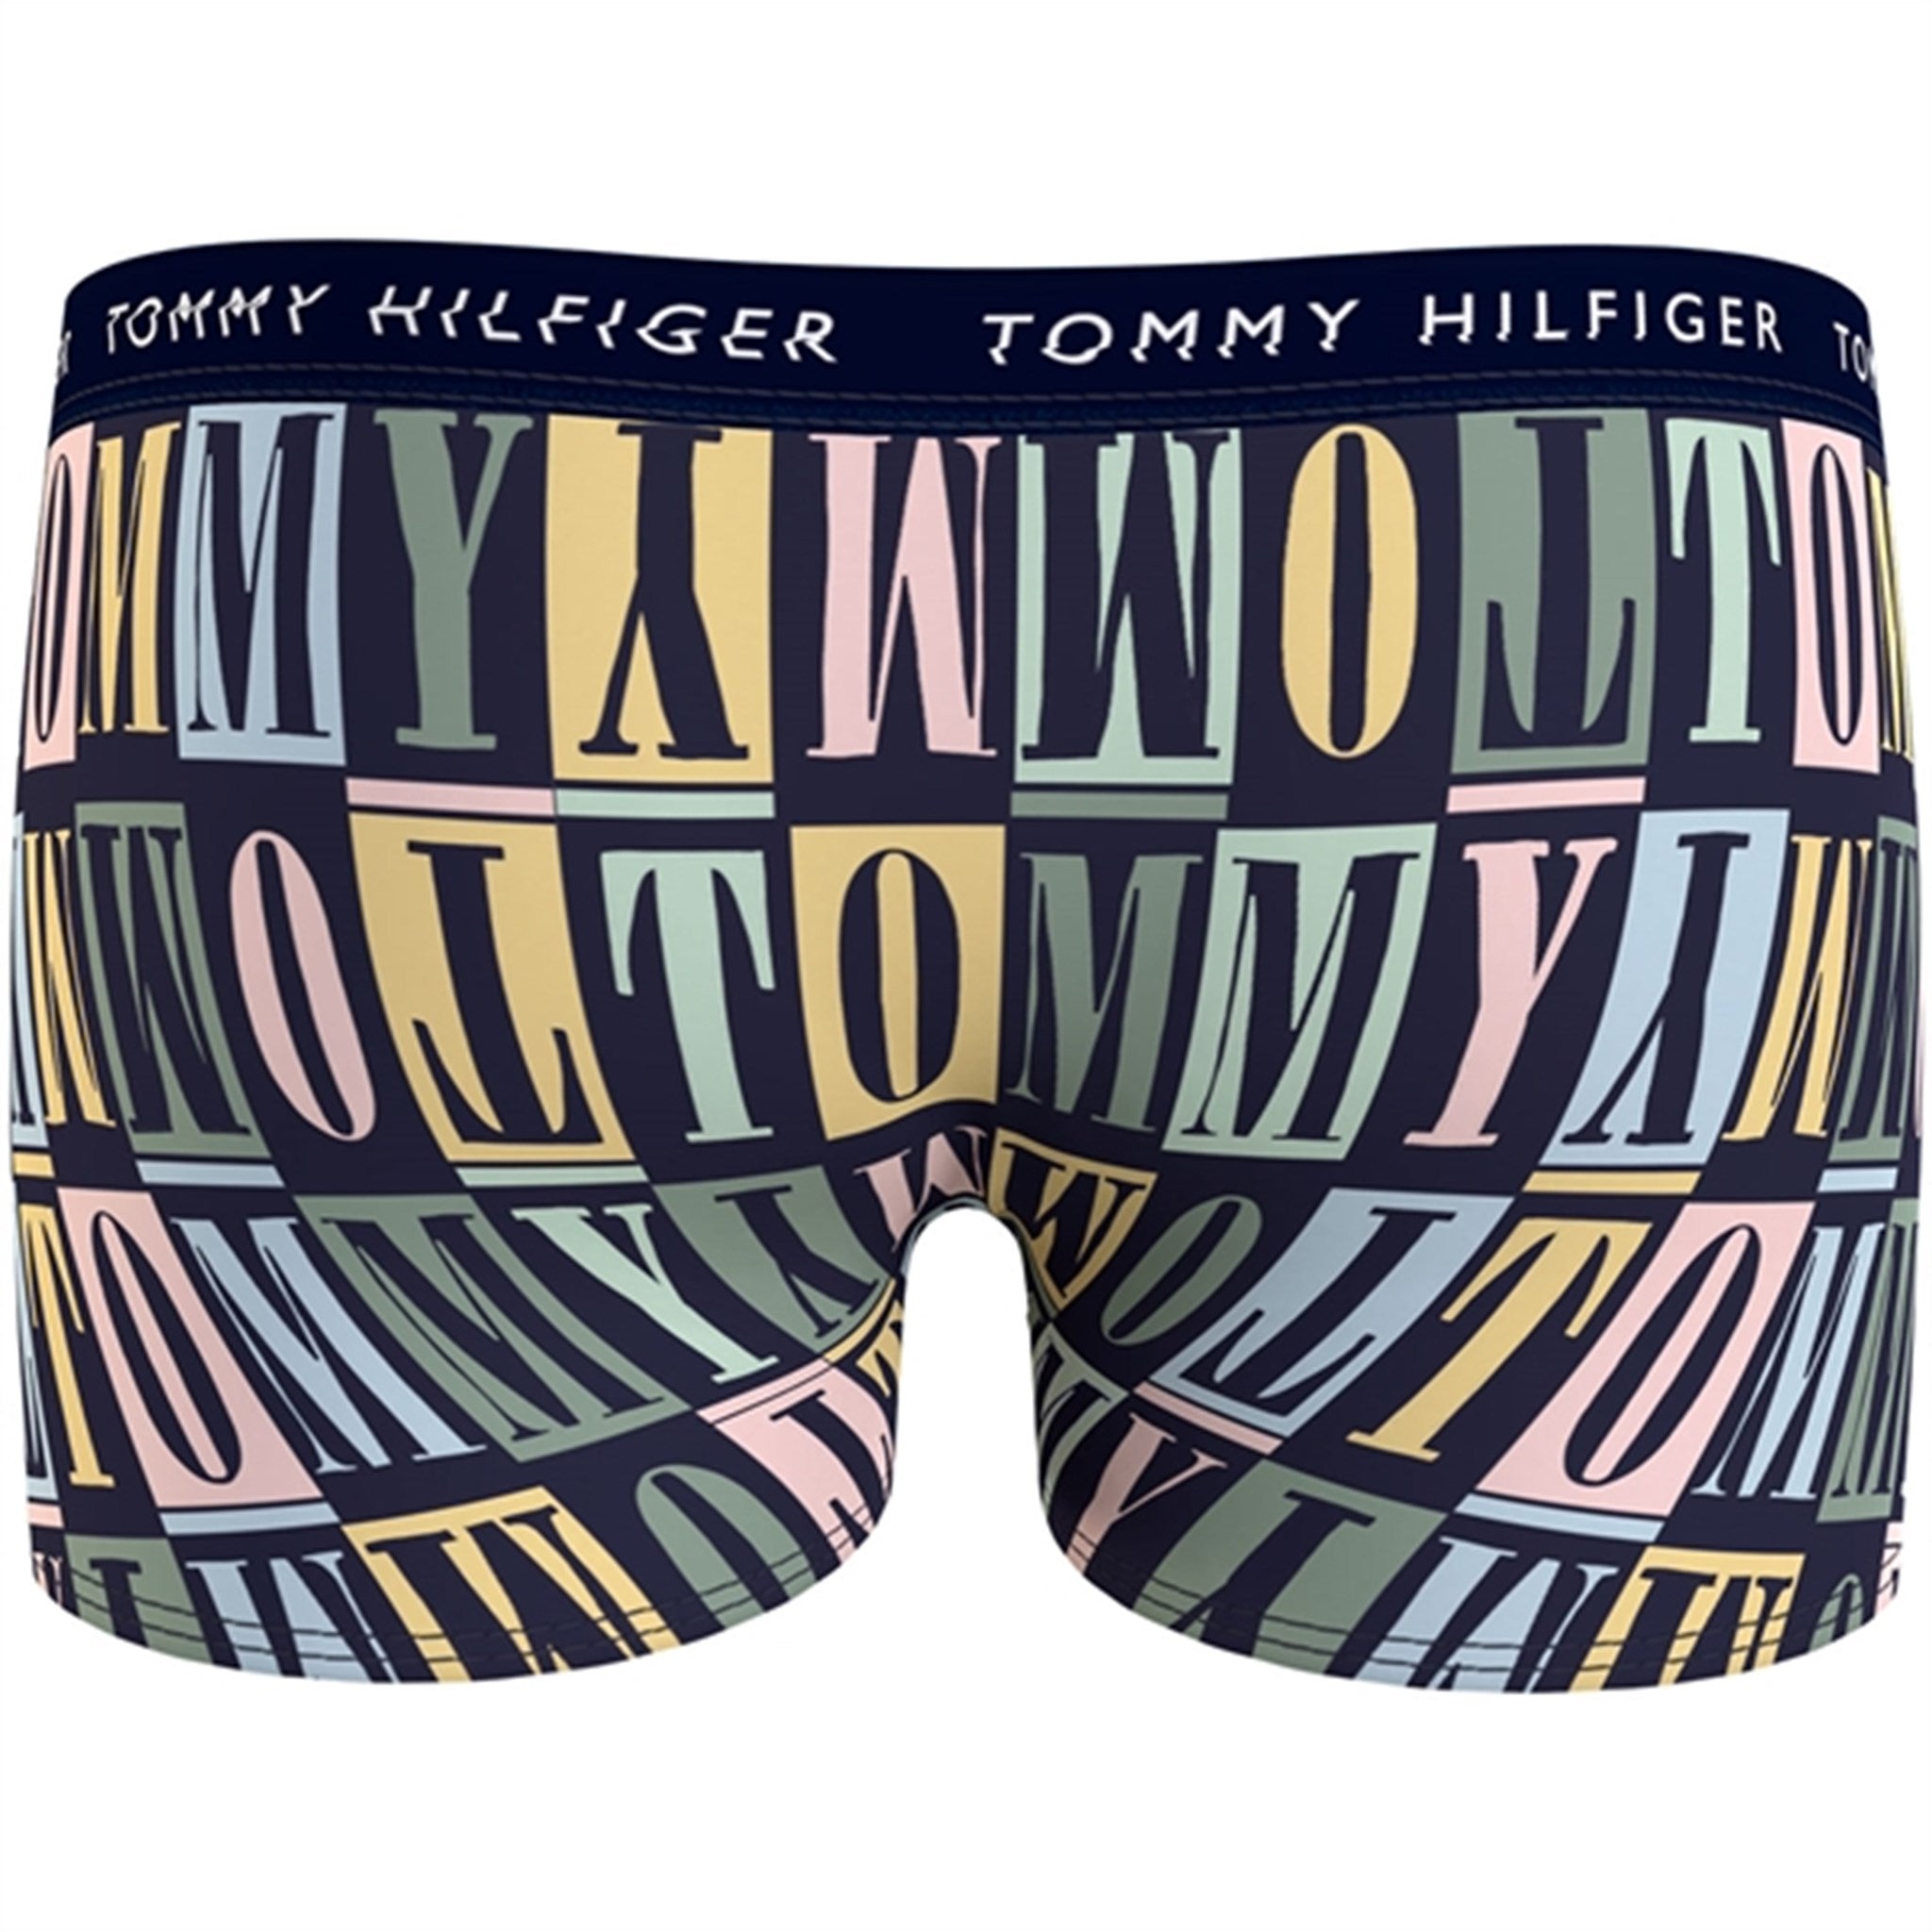 Tommy Hilfiger Boxershorts 3-pak Type Prnt/Twi Navy/Minty 3